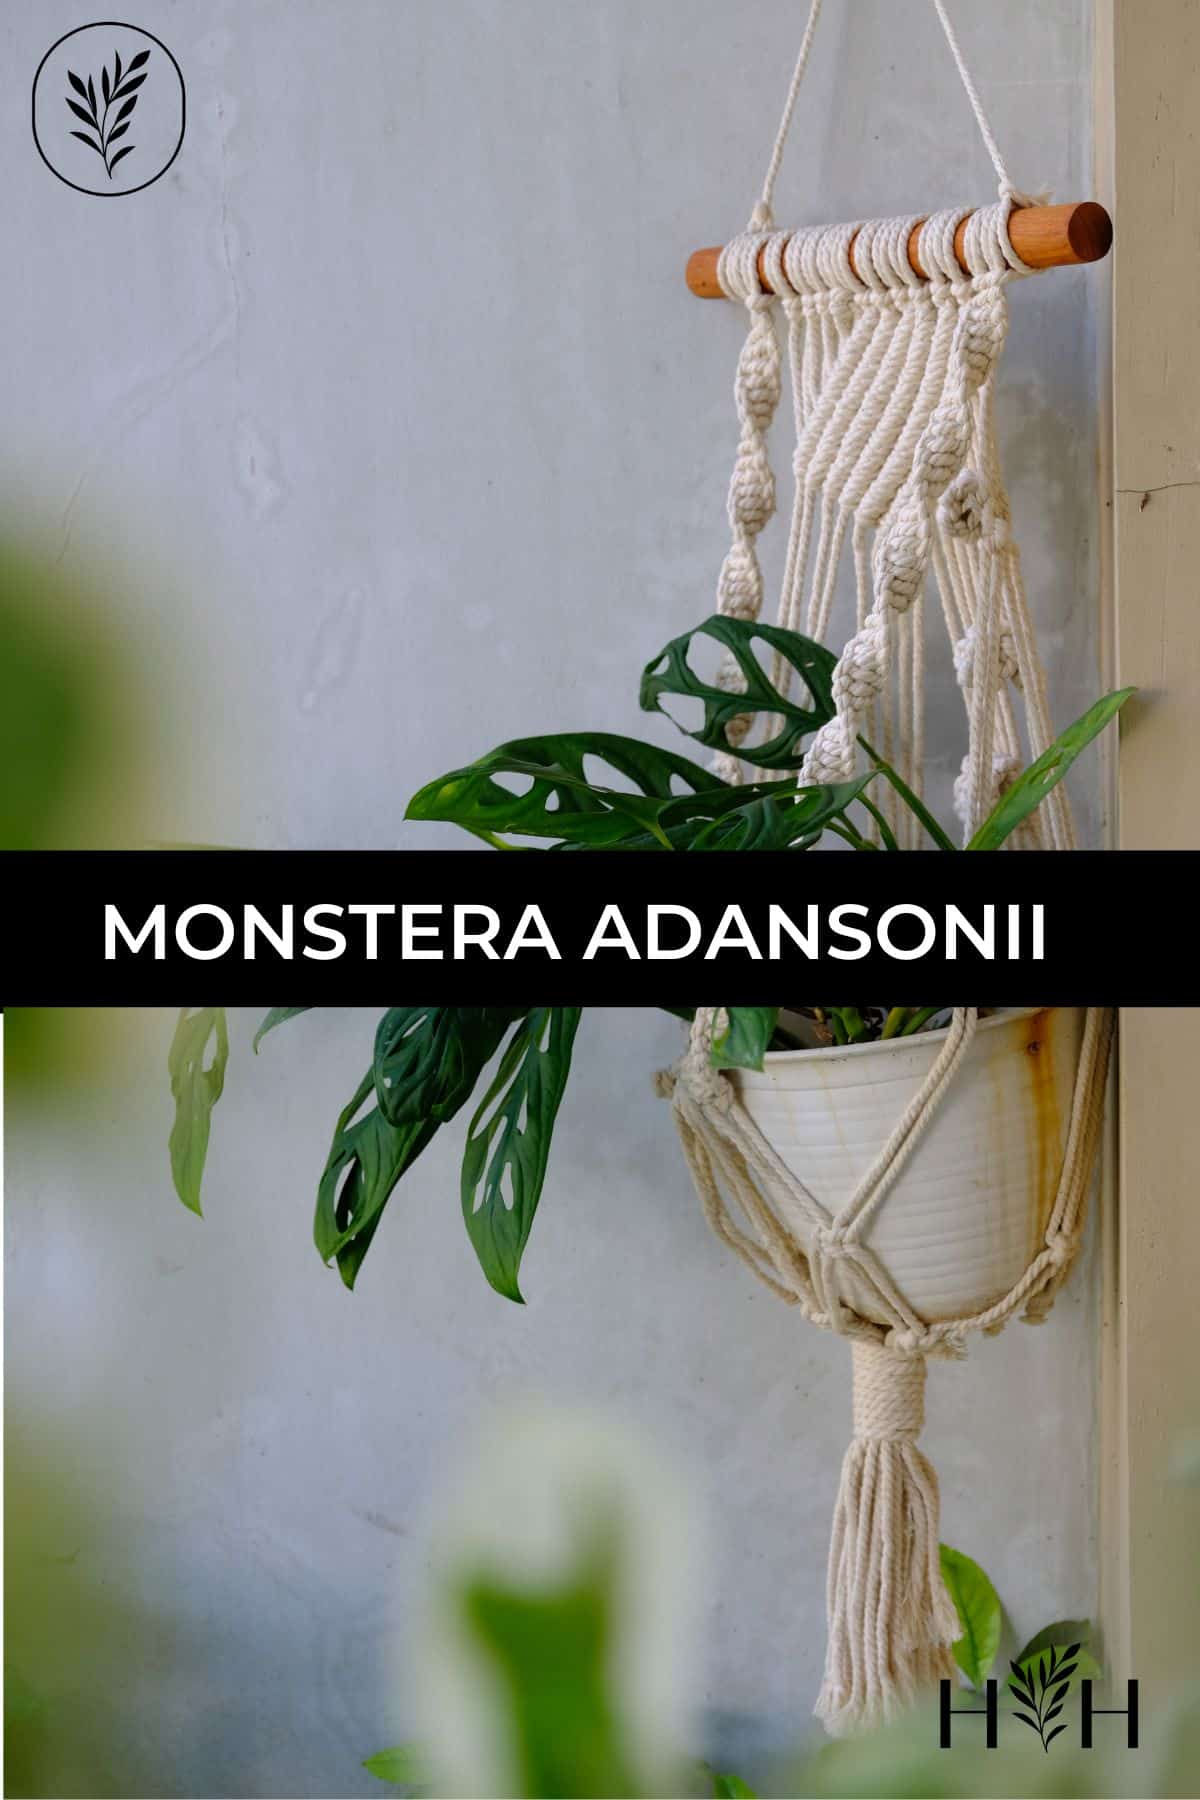 Monstera adansonii via @home4theharvest